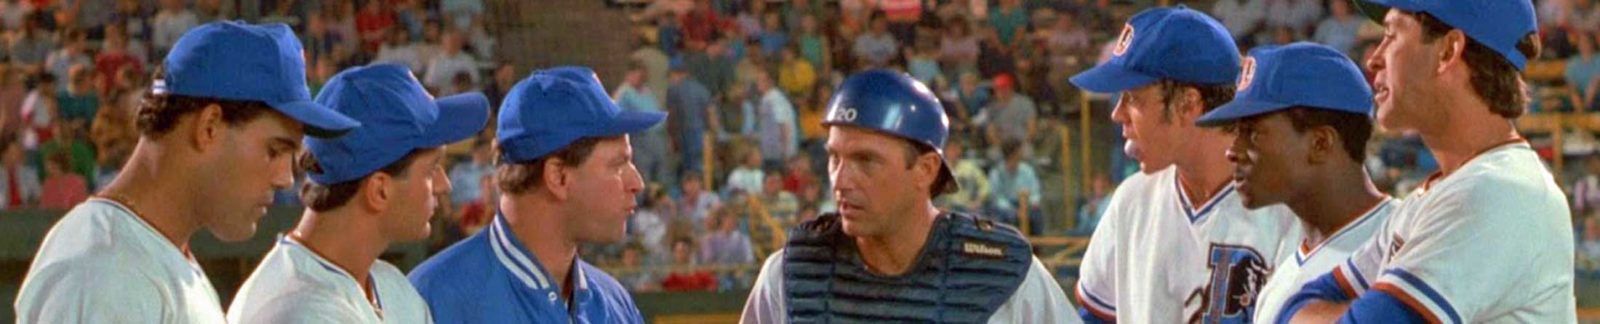 Bull Durham - baseball movie header